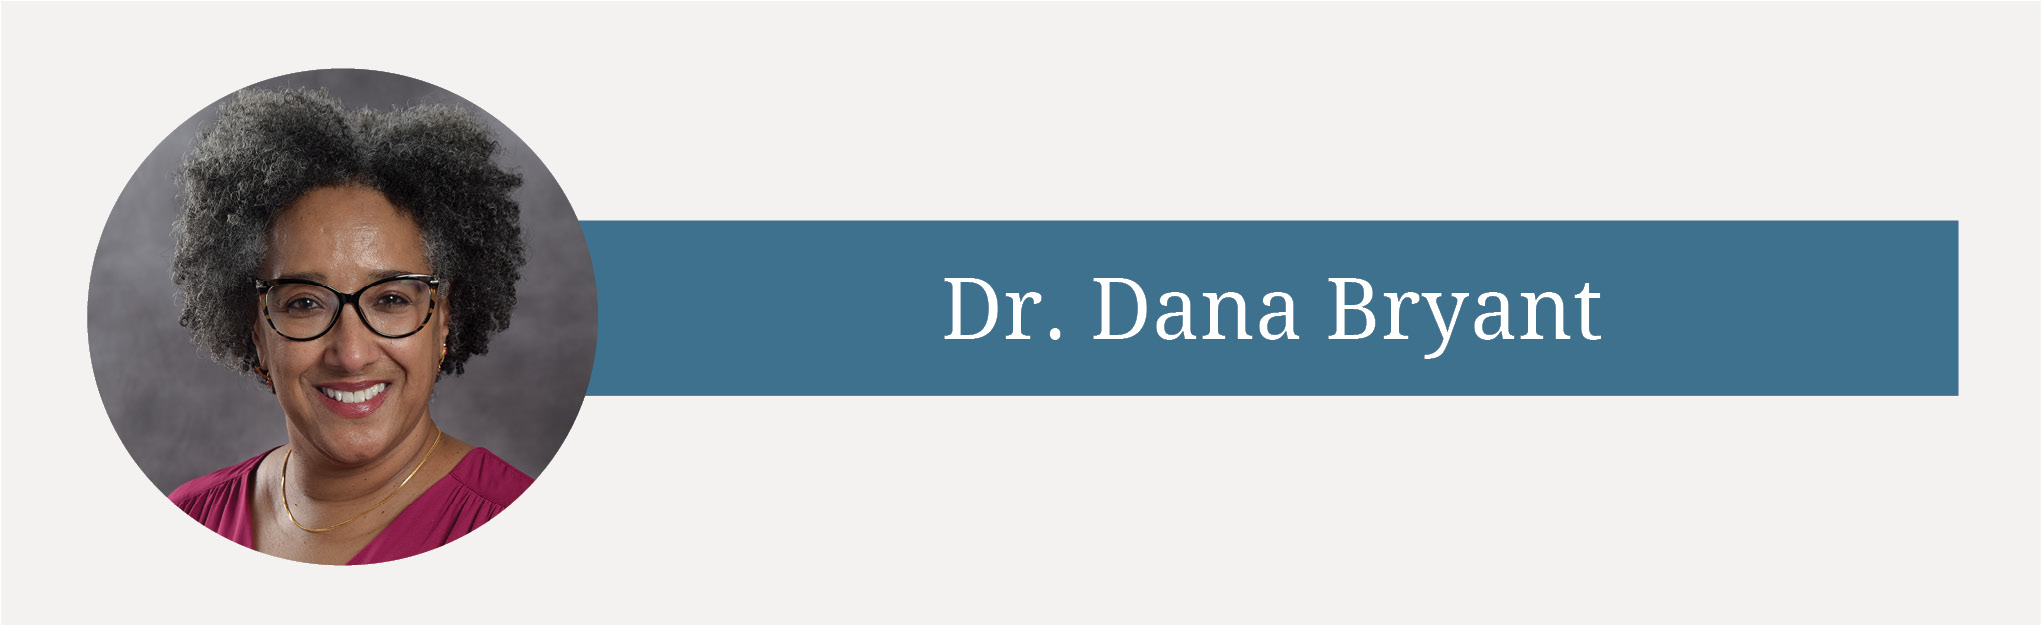 Dana Bryant, MD, MHA, FACOG, Joins White Plains Hospital Physician Associates